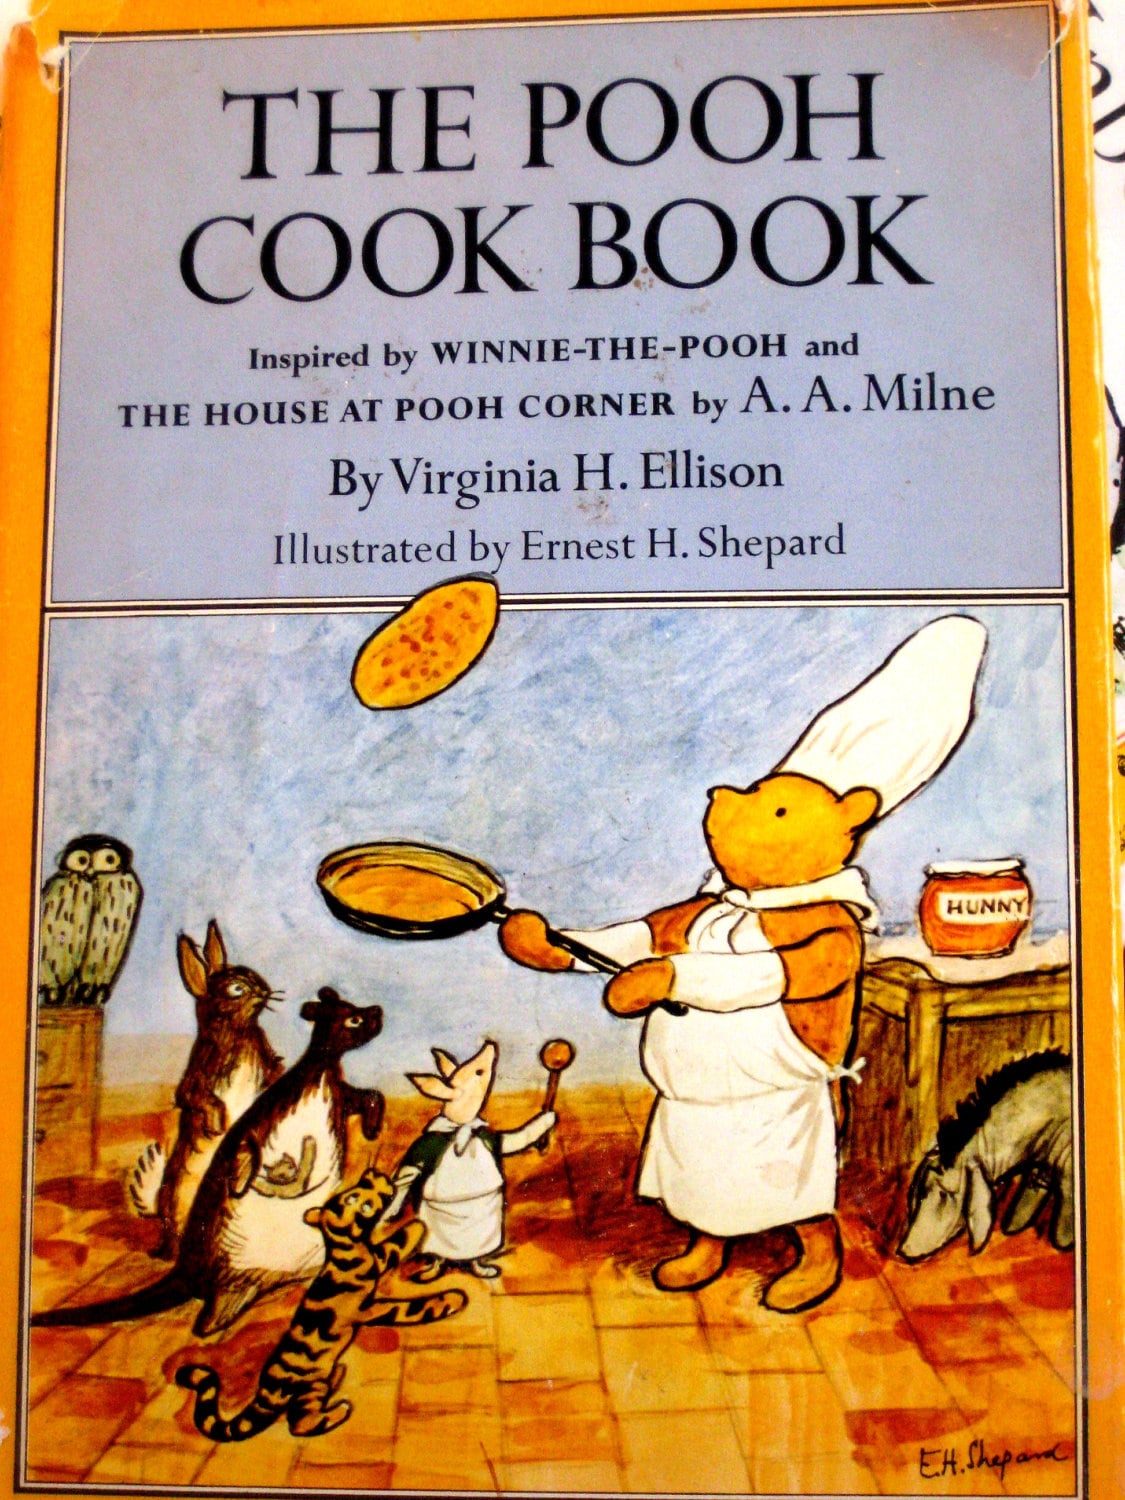 Winnie the pooh cookbook pdf